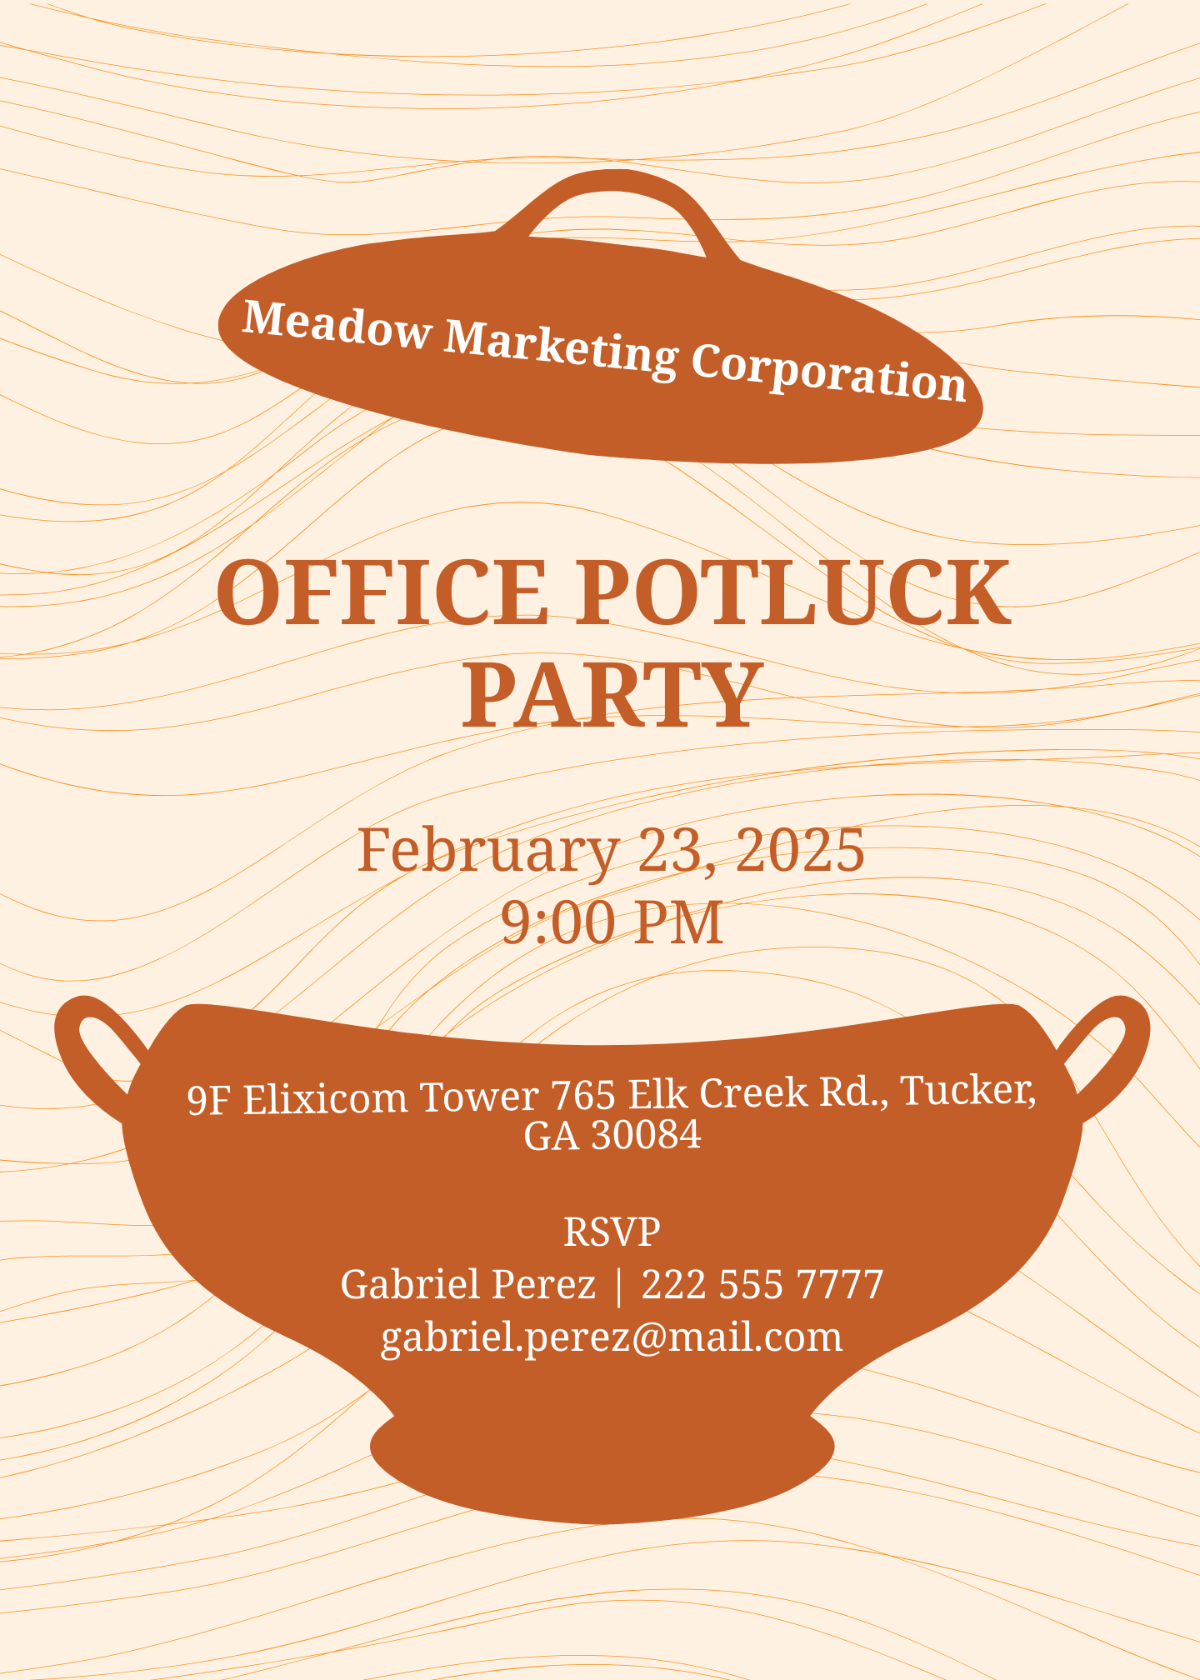 Office Potluck Party Invitation